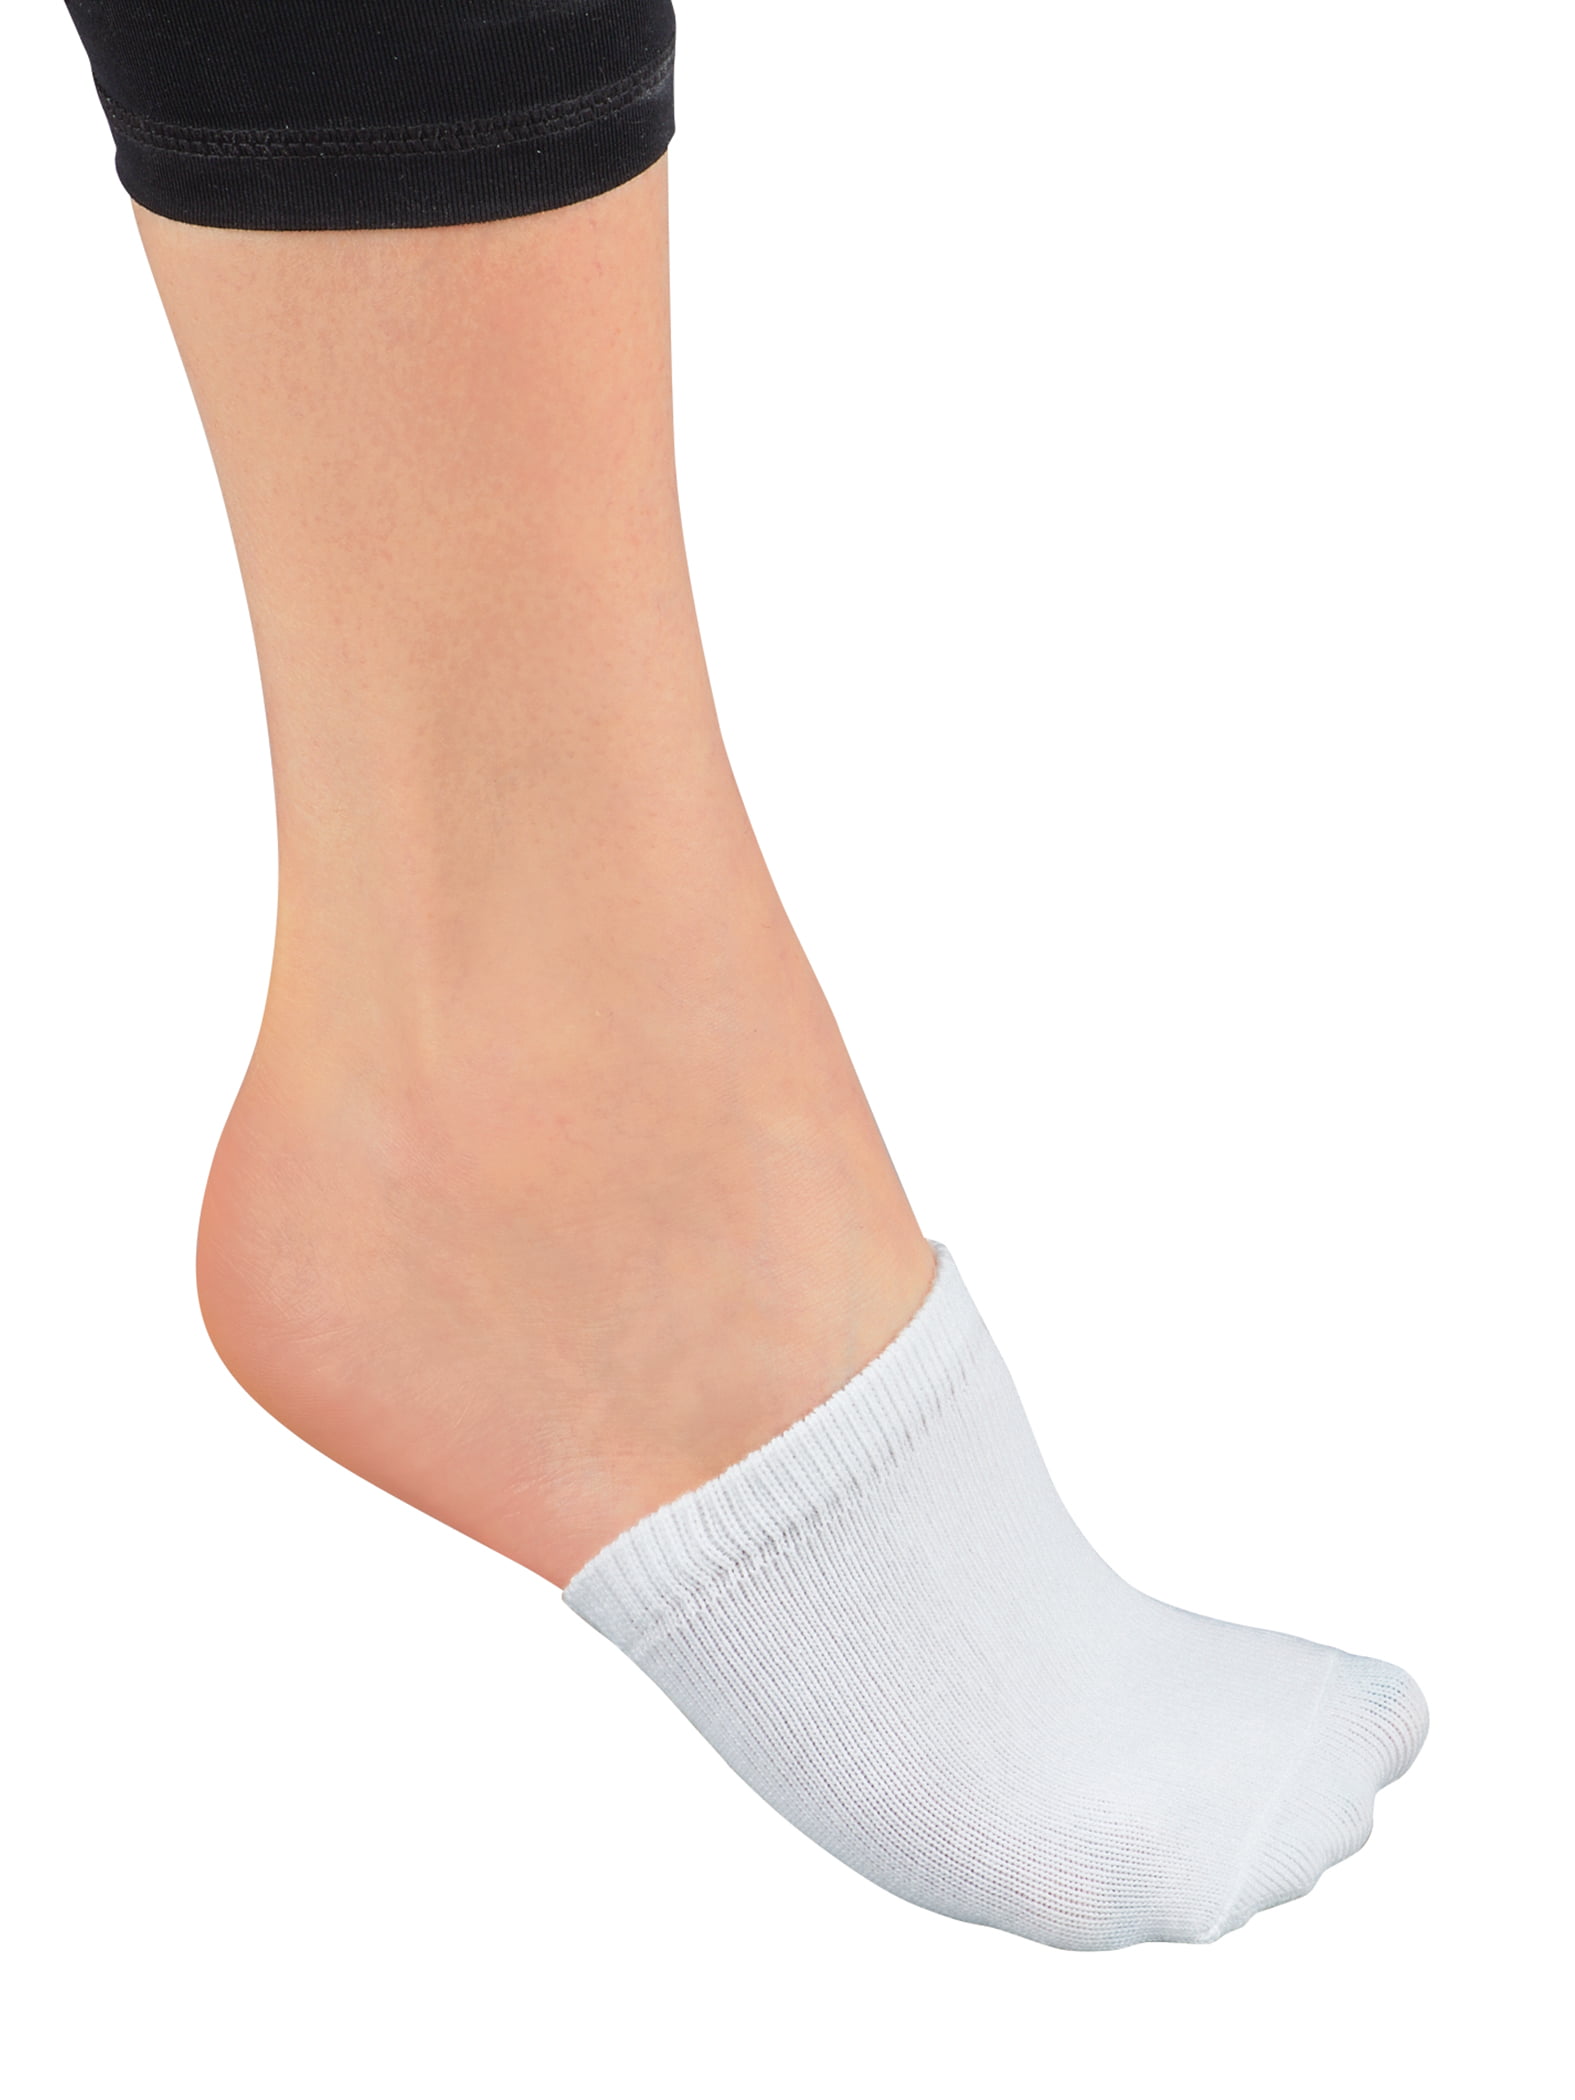 2Pack Women's No Show Five Toe Heelless Cotton Half Socks/Toe inner Socks 